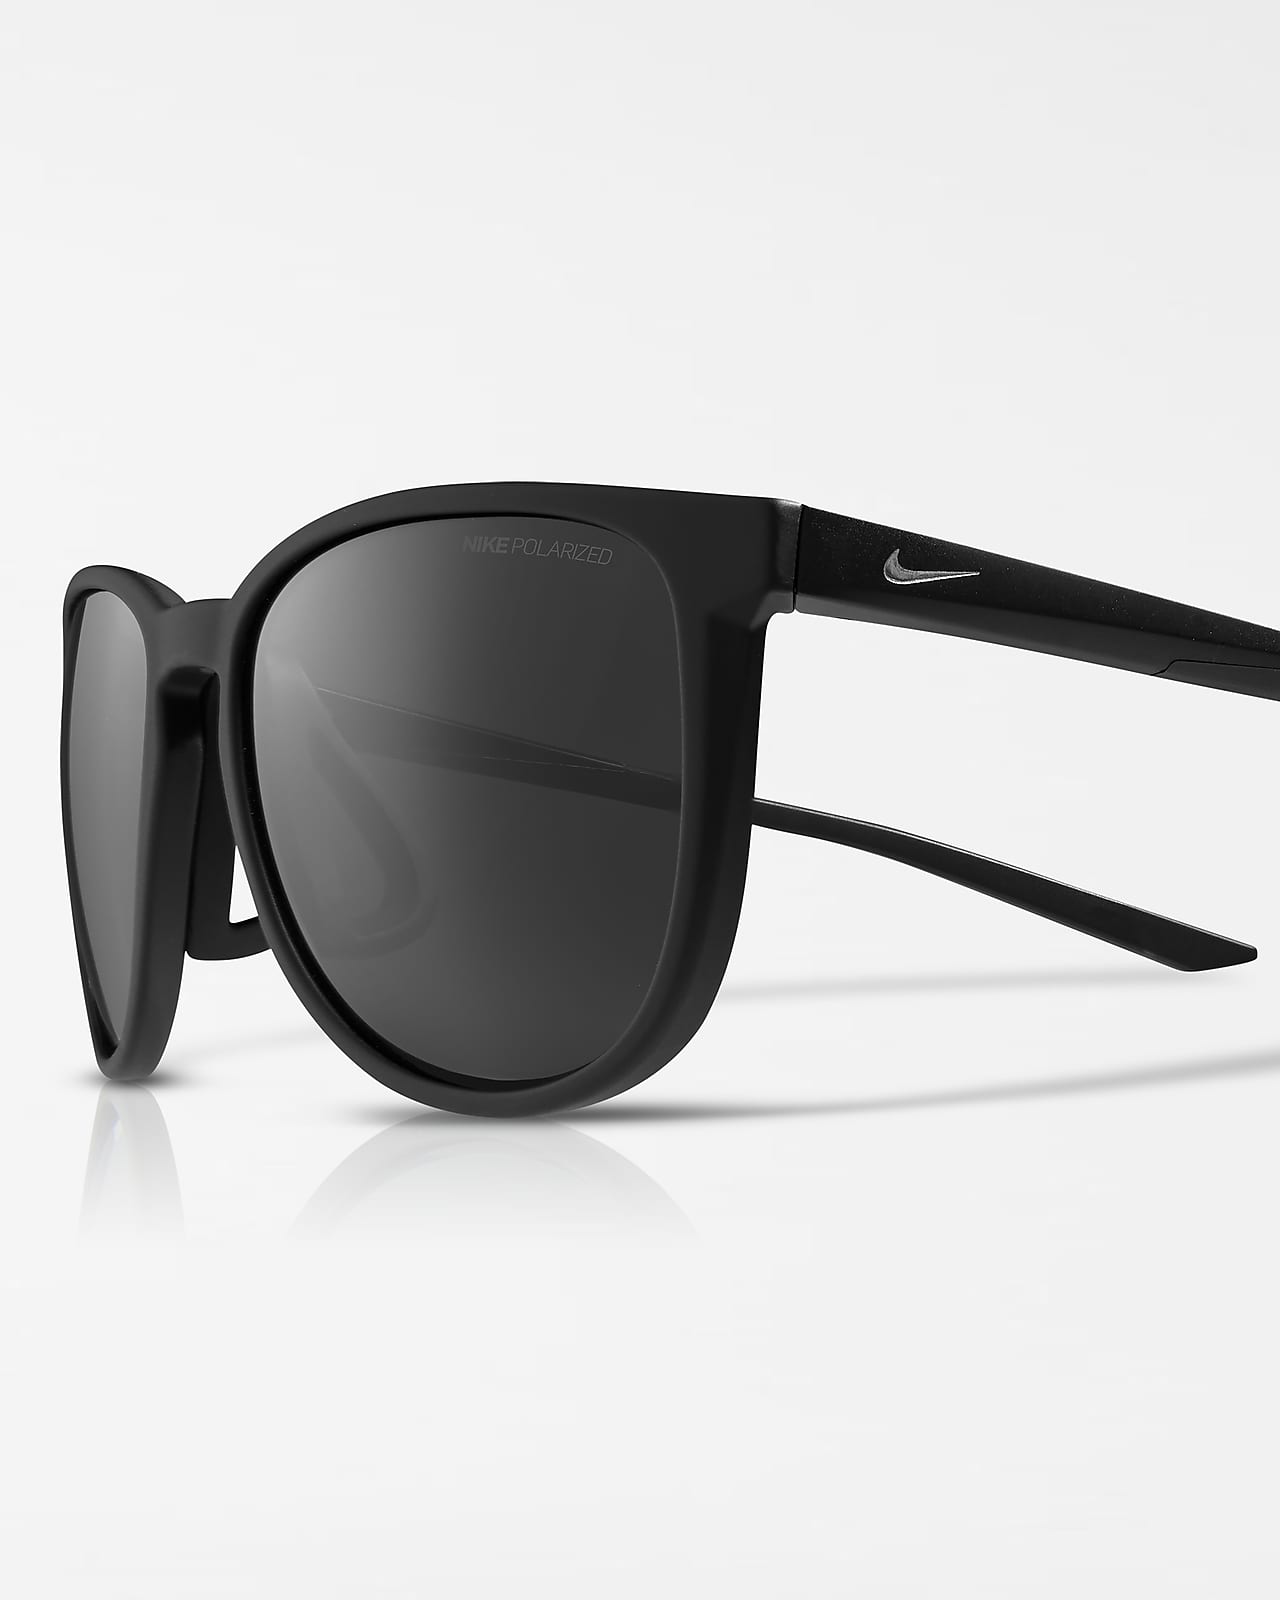 Sunglasses For Men Fashion Polarized Sunglasses Glasses Women